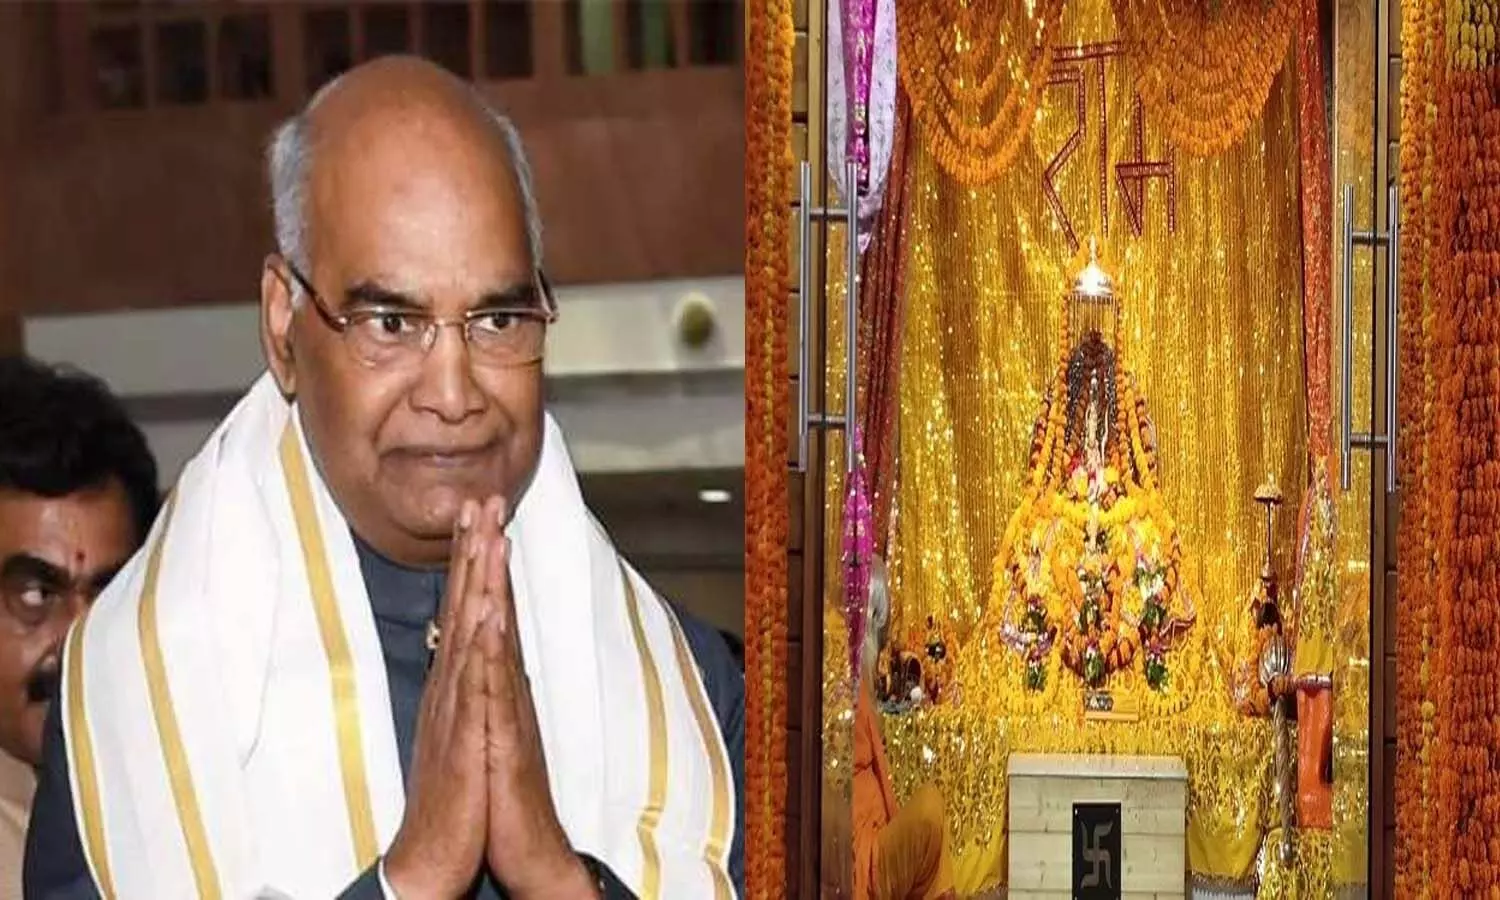 President Ram Nath Kovind will visit Ram Lalla